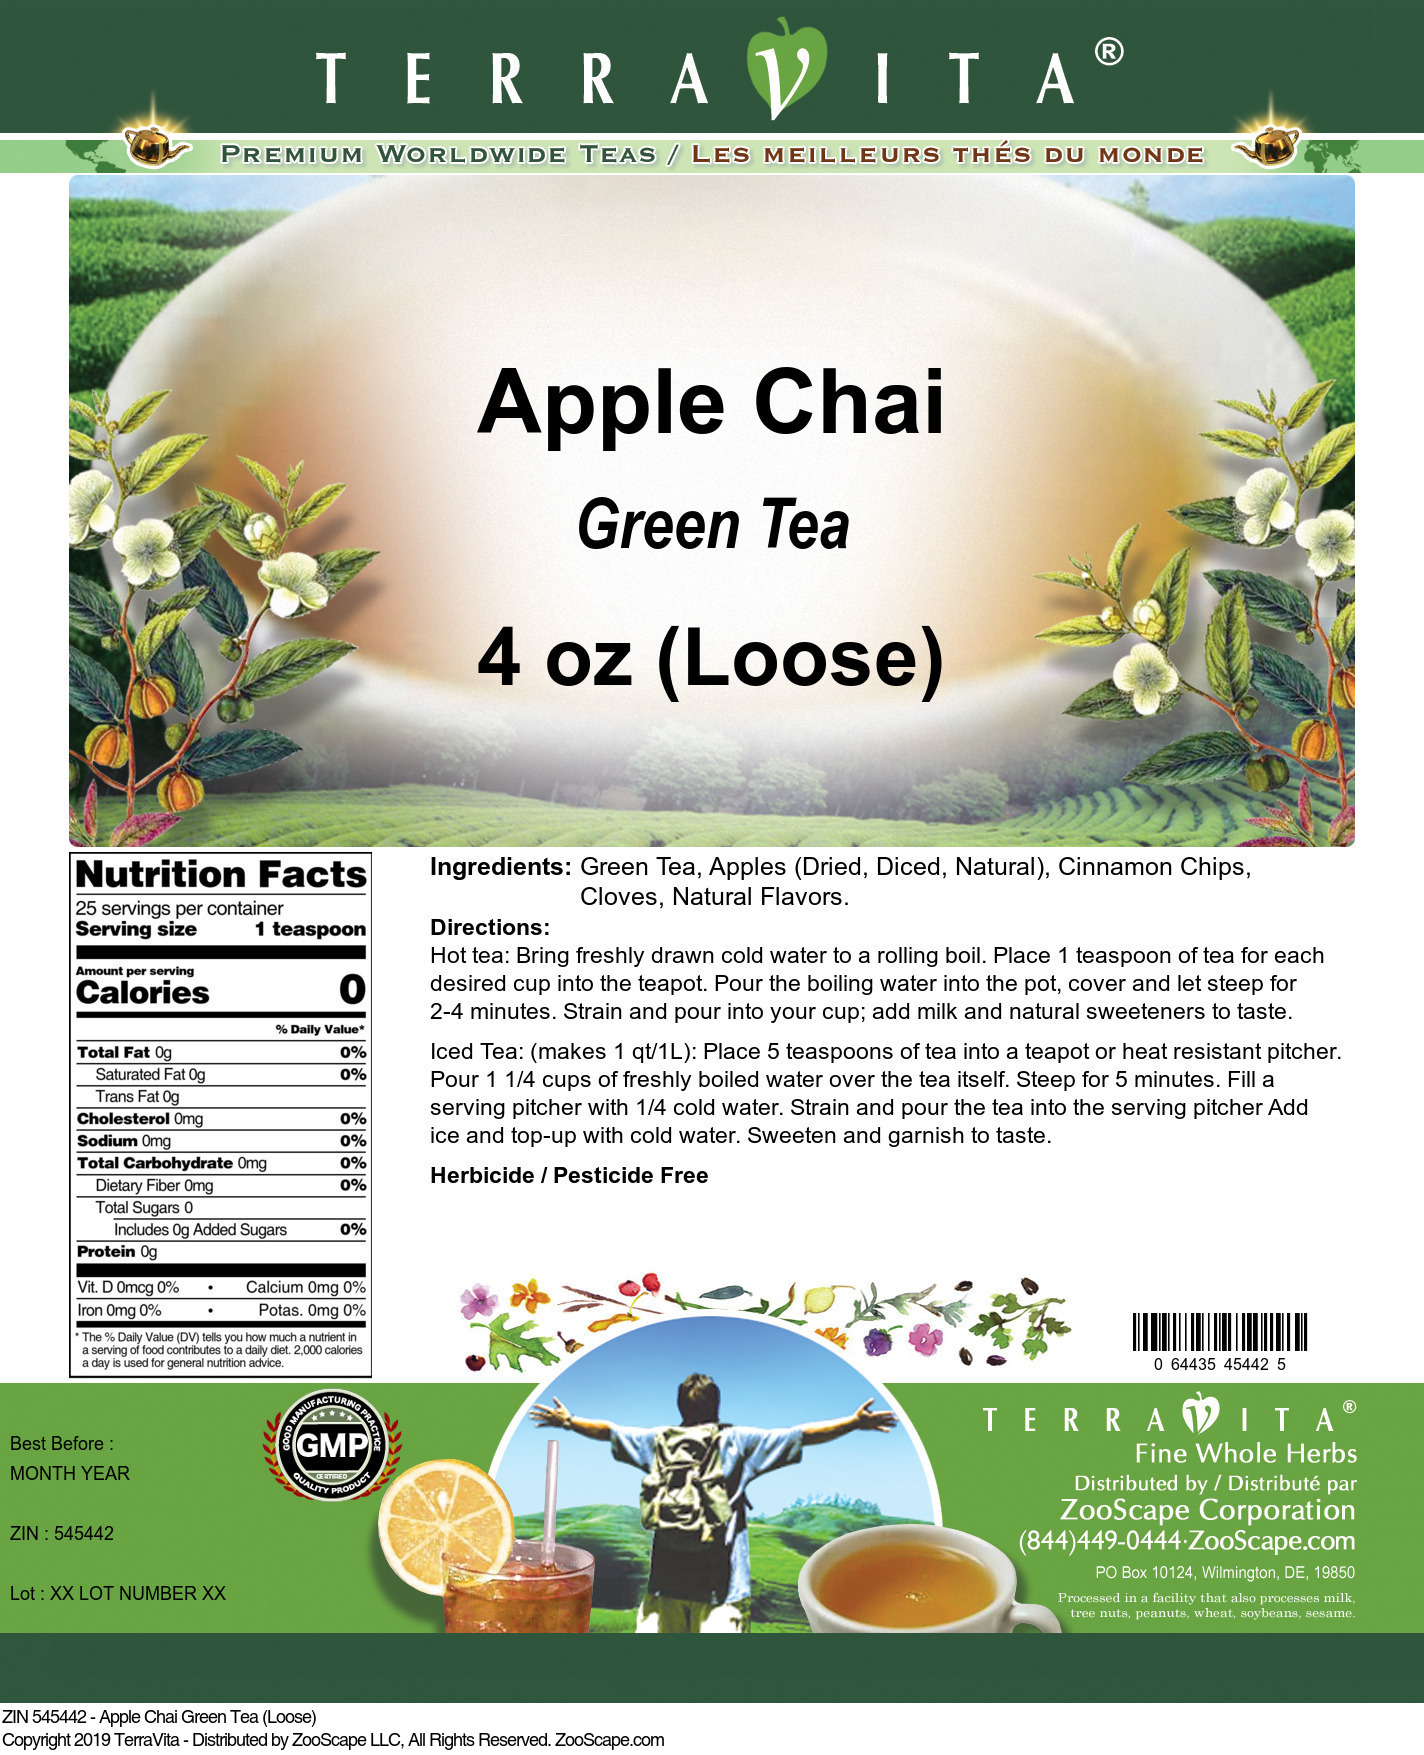 Apple Chai Green Tea (Loose) - Label